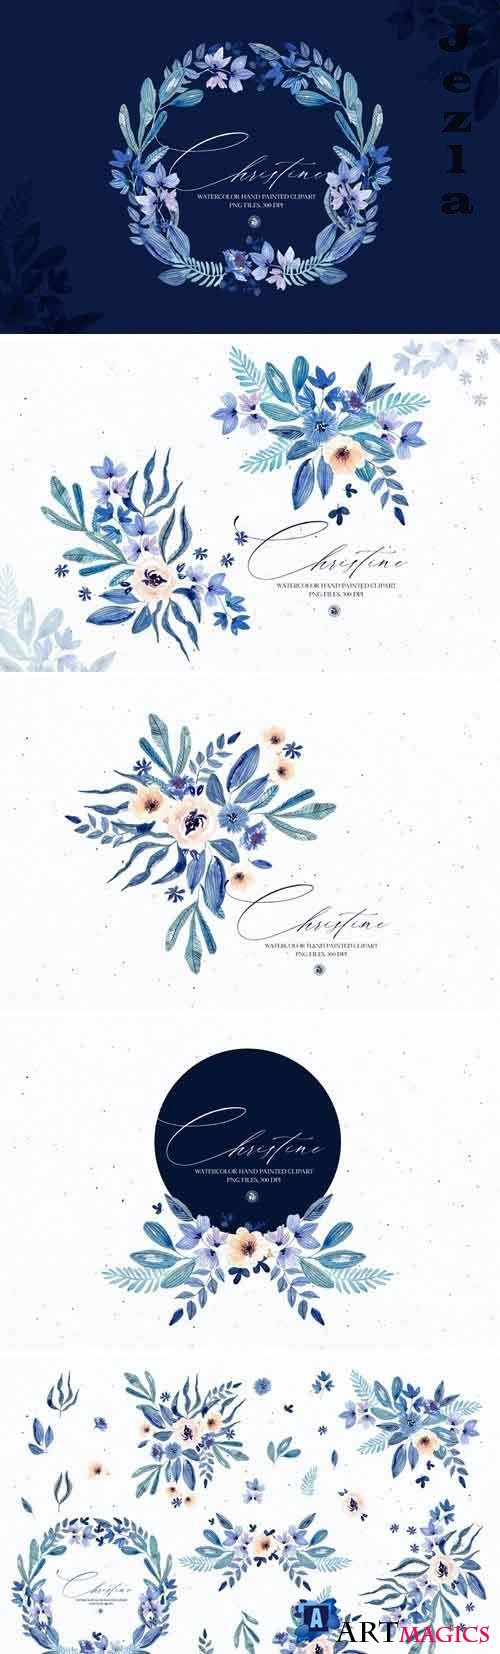 Watercolor floral set - Christine - 5503082